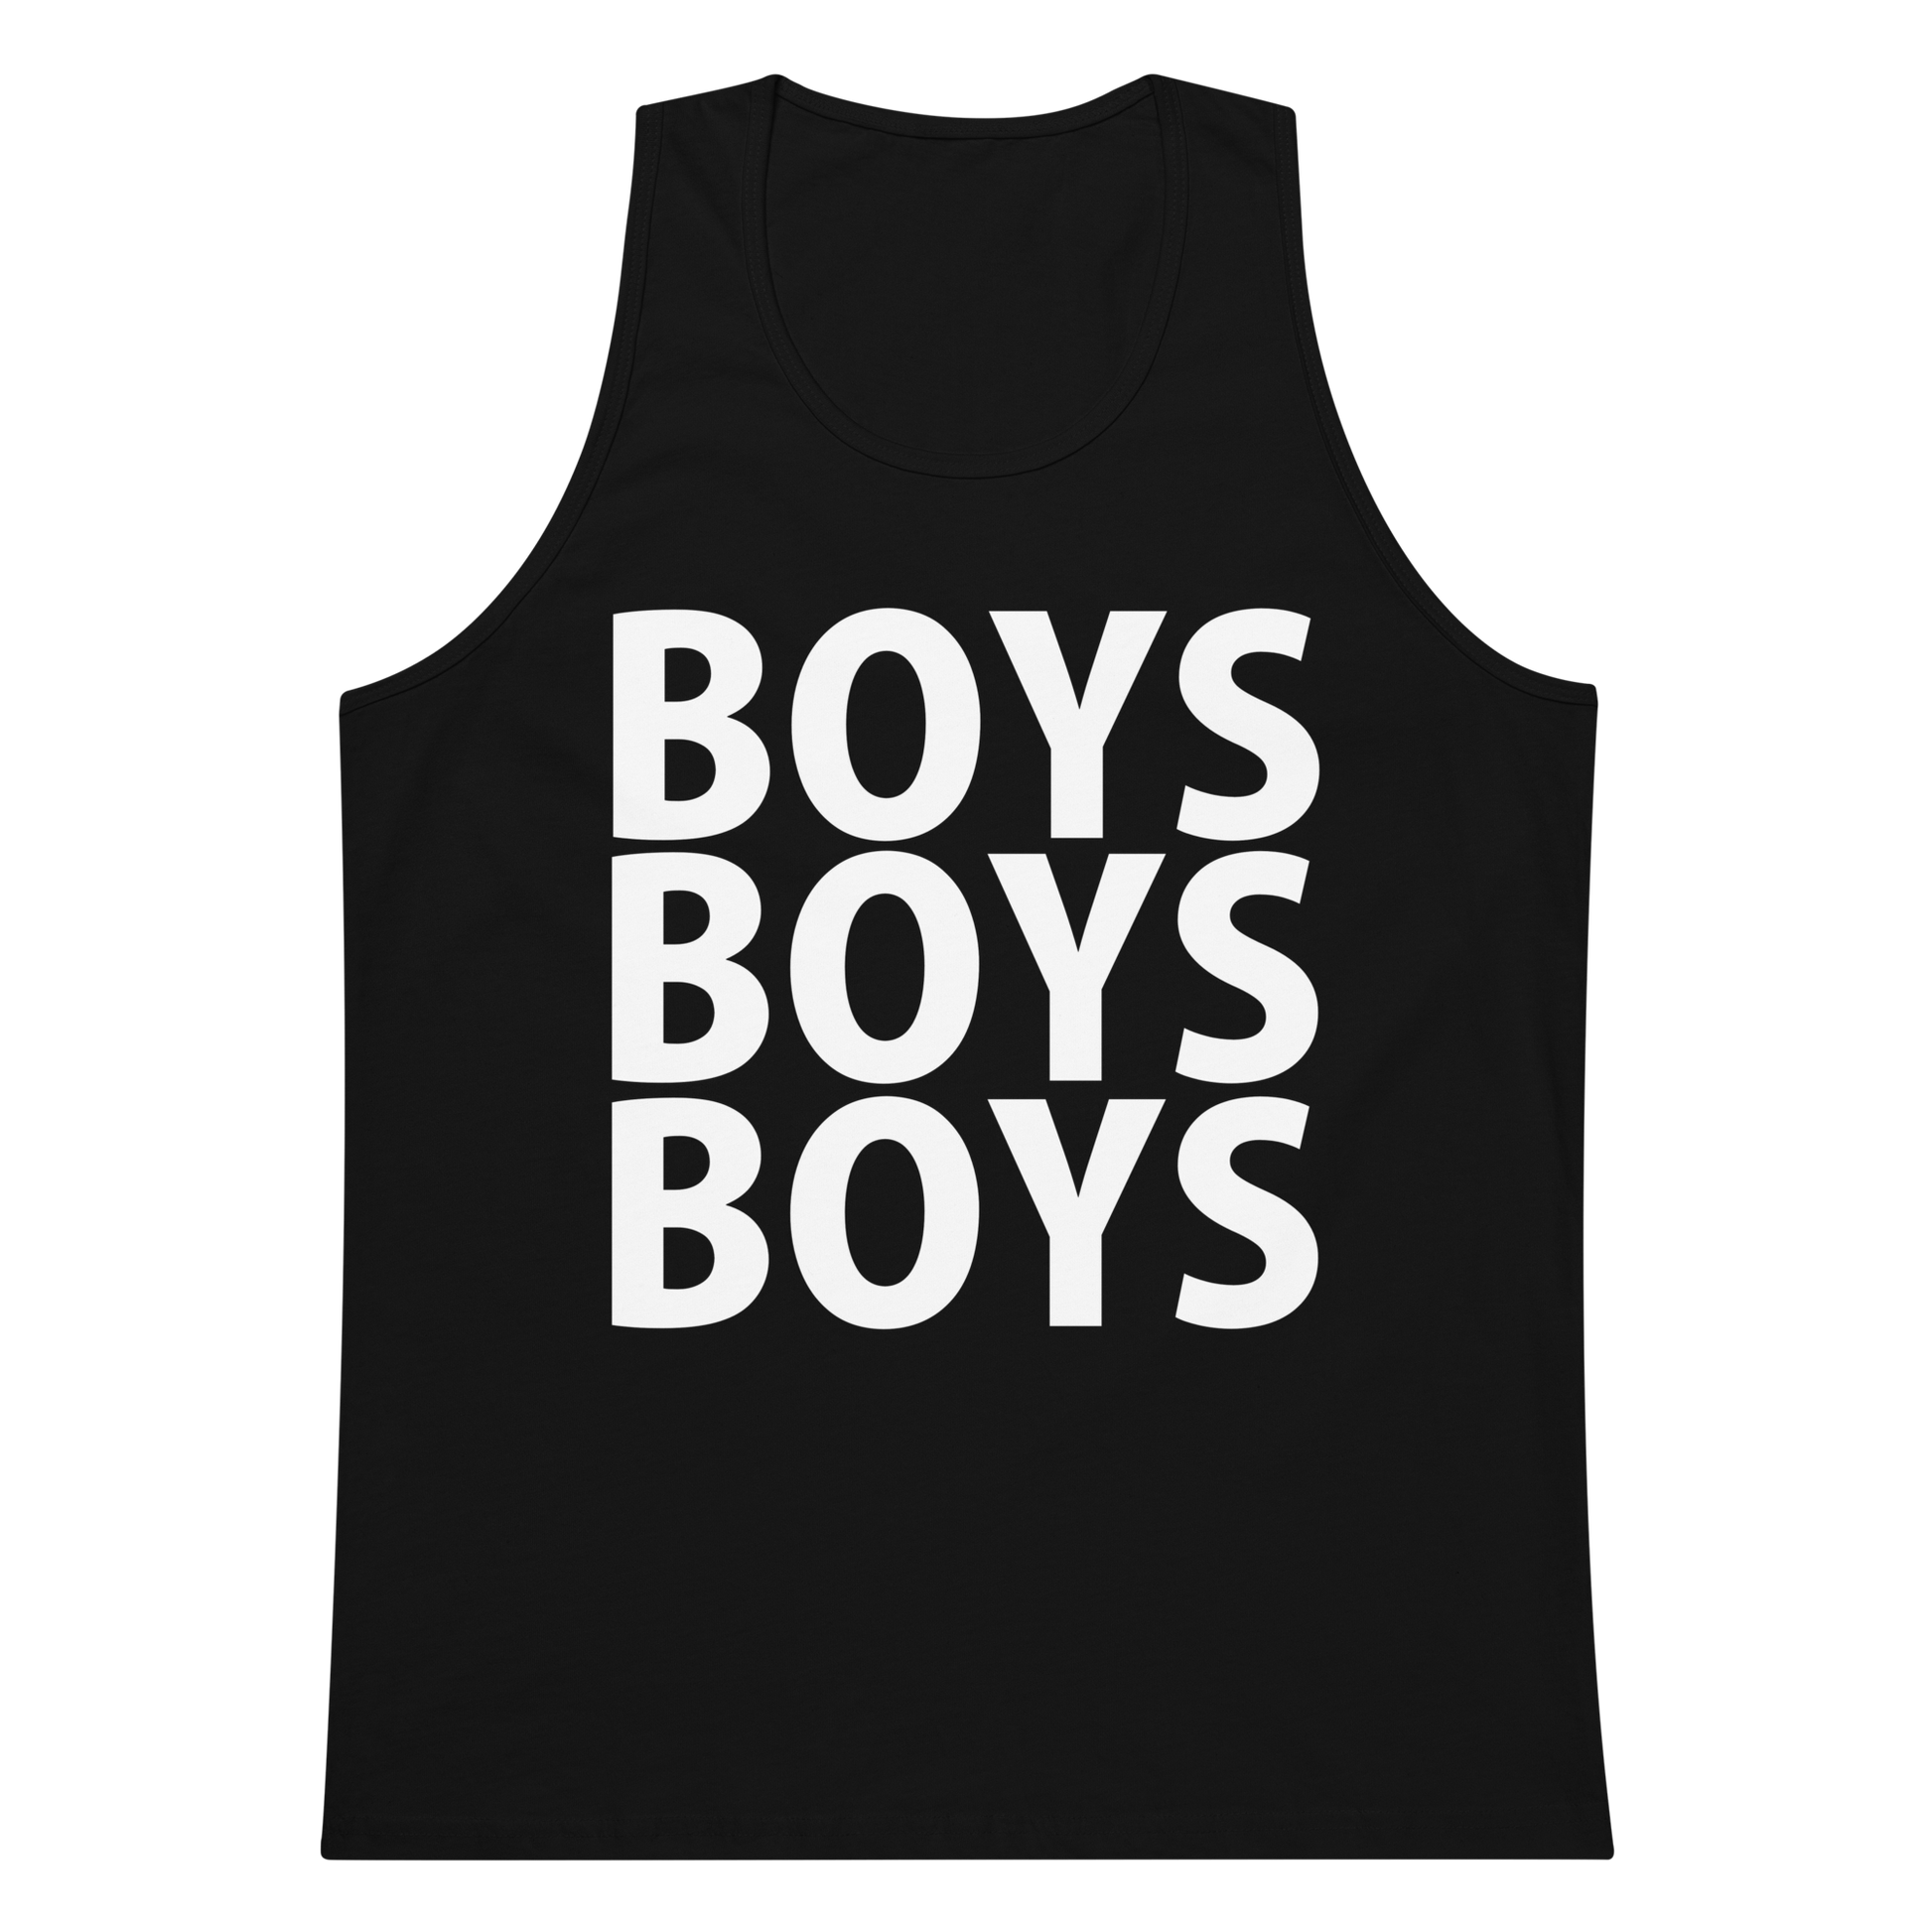 Boys Boys Boys Tank Top - Black